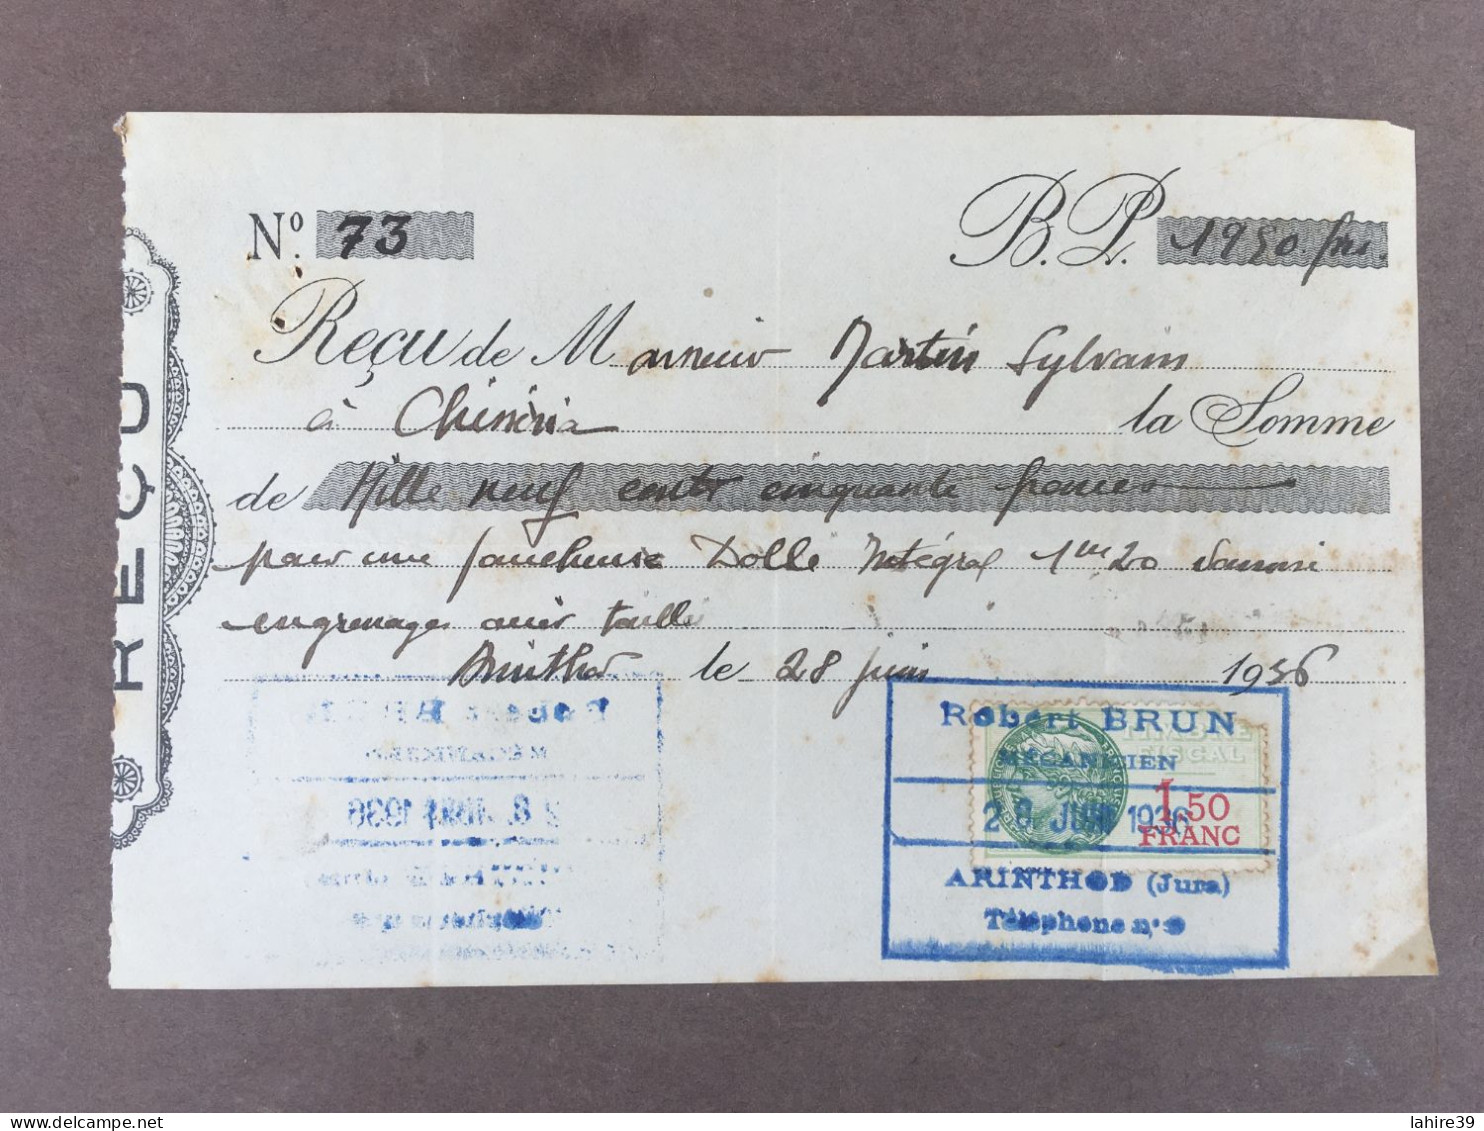 Reçu De Lettre De Change / Robert Brun / Mécanicien / Arinthod / Jura / 1936 - Bills Of Exchange